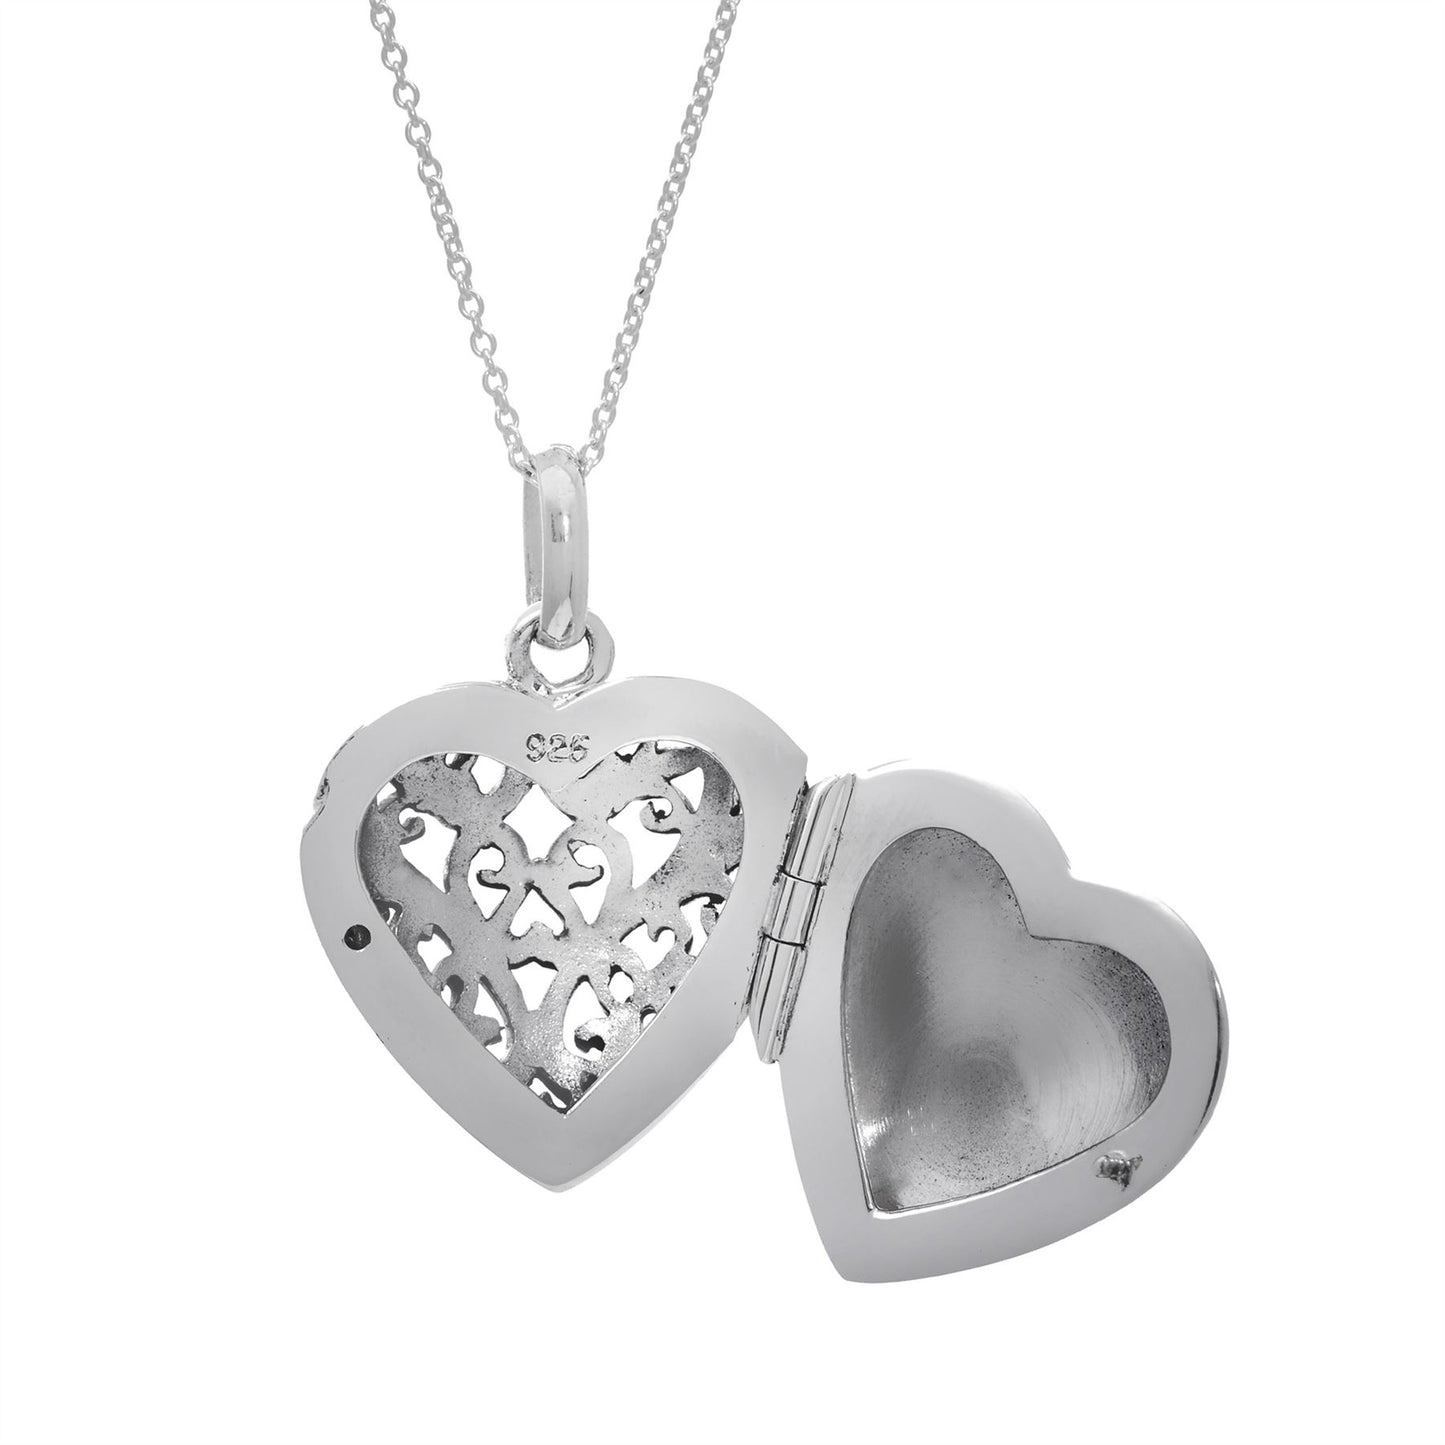 Sterling Silver Vintage Style Filigree Heart Locket Pendant Necklace